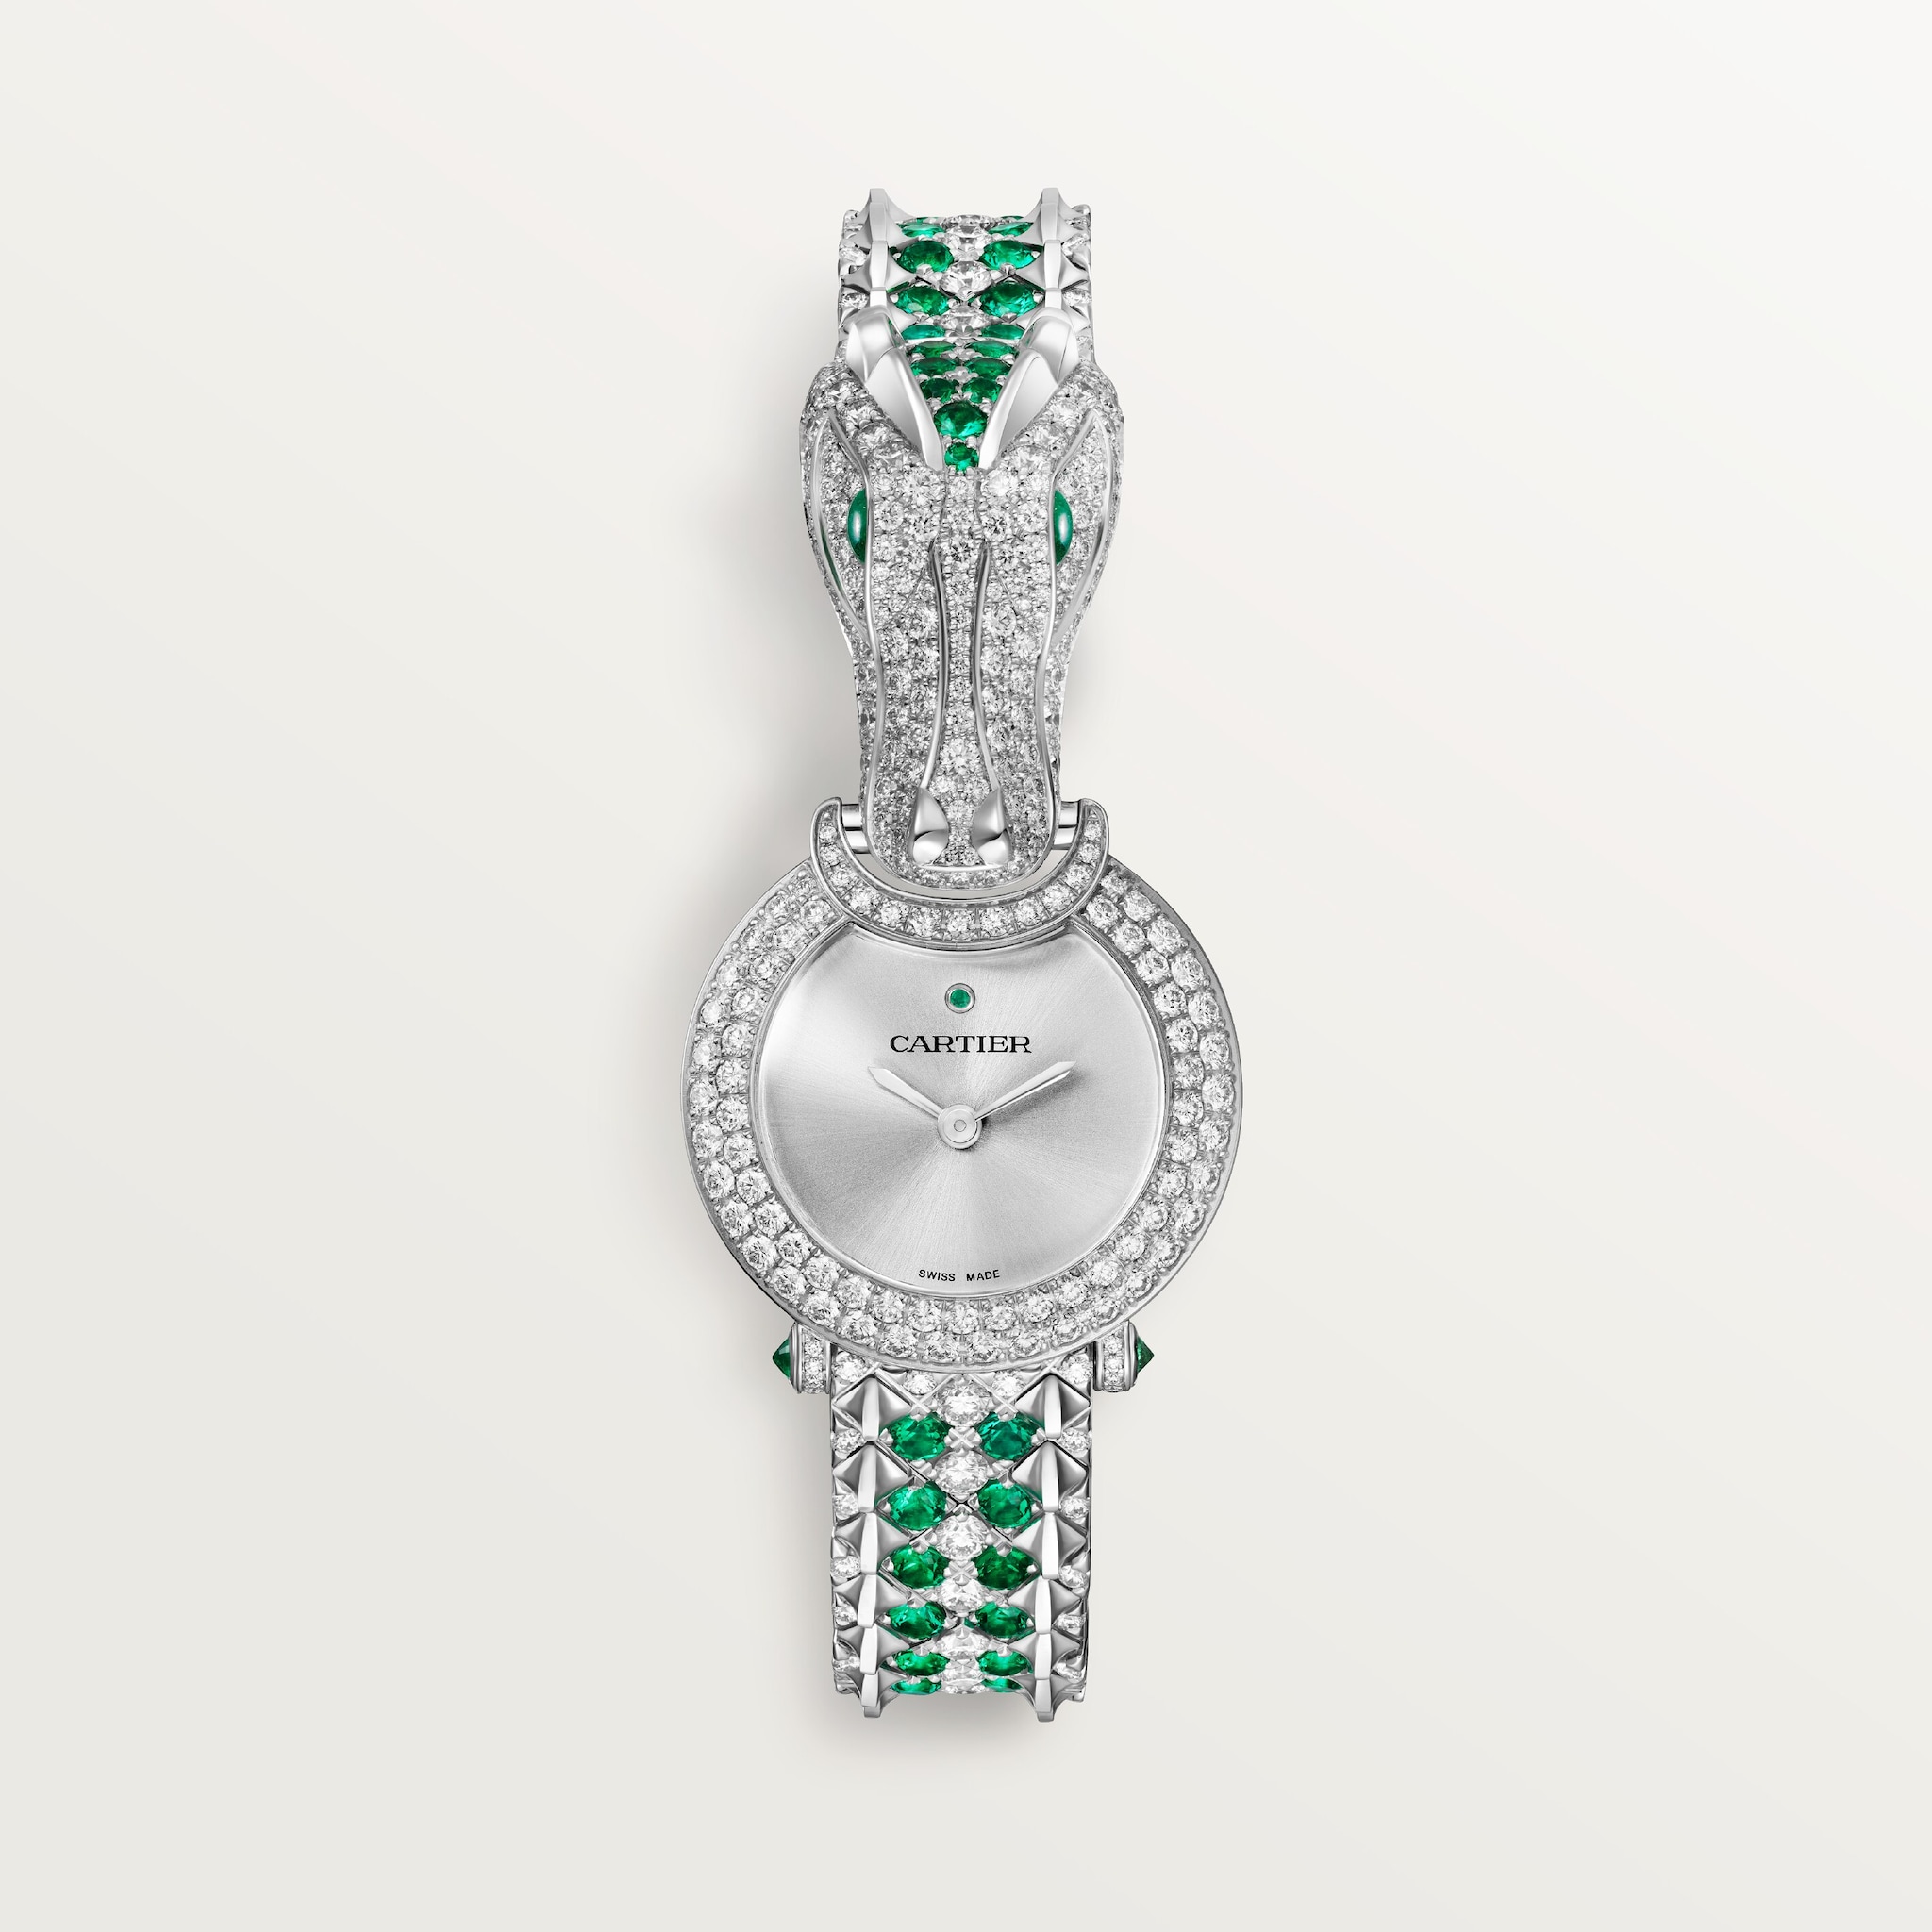 Animal Jewelry watch 23.6 mm, quartz movement, white gold, emeralds, diamonds